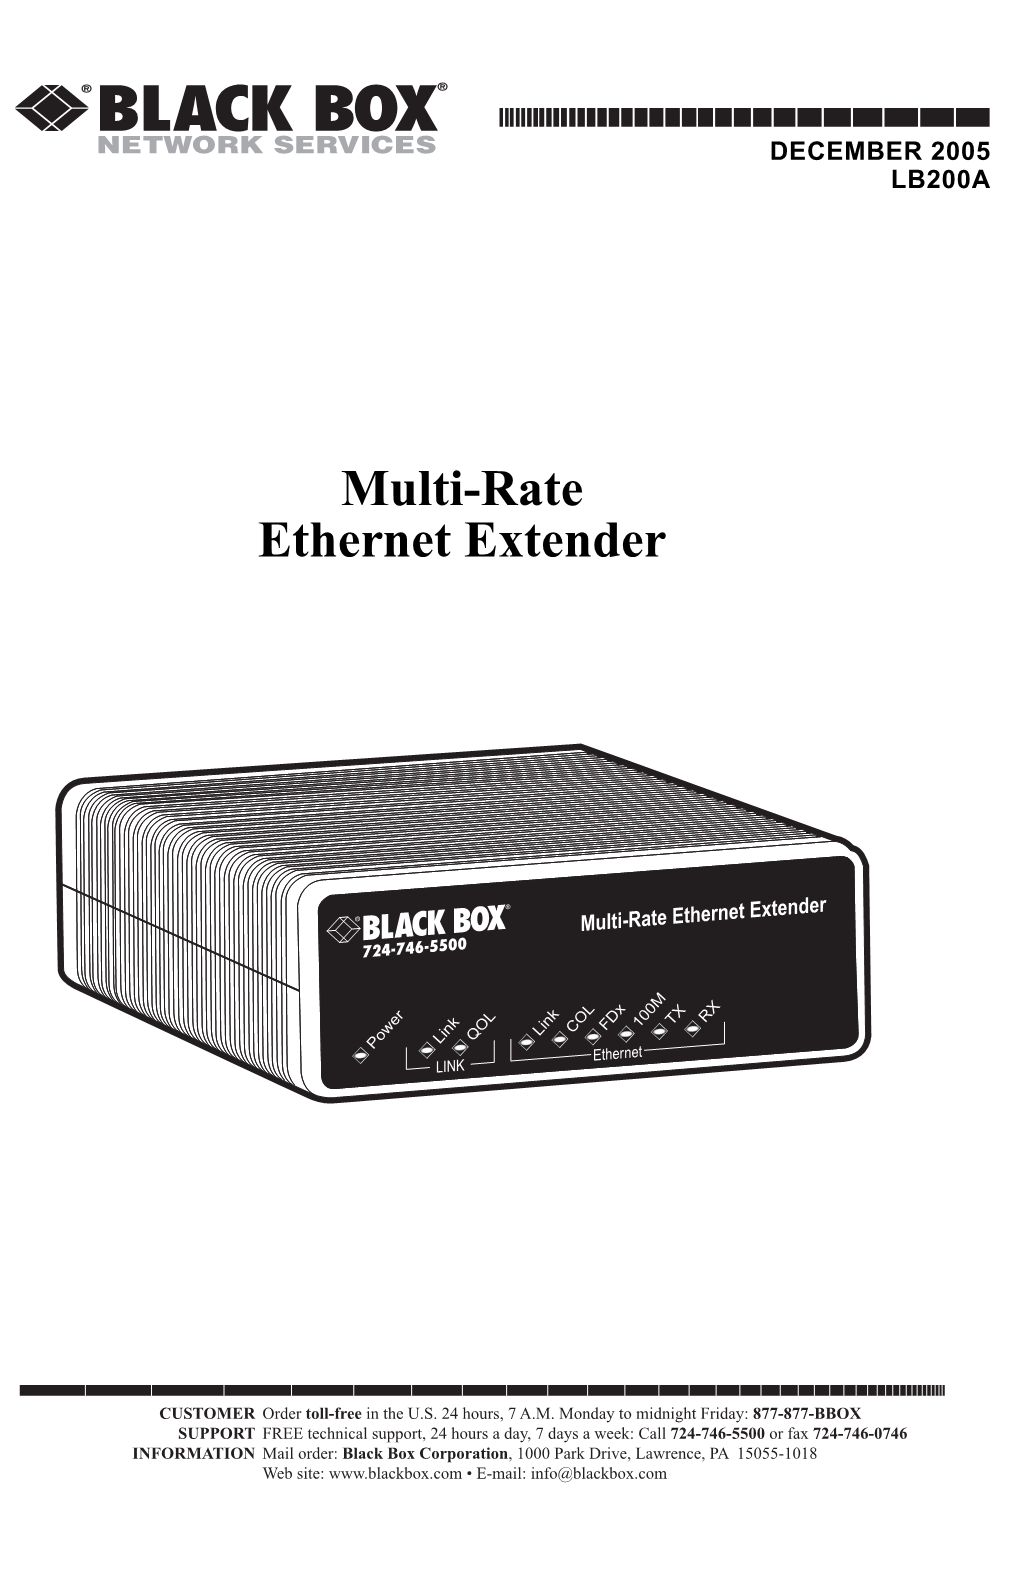 Black Box Multi-Rate Ethernet Extender User Manual